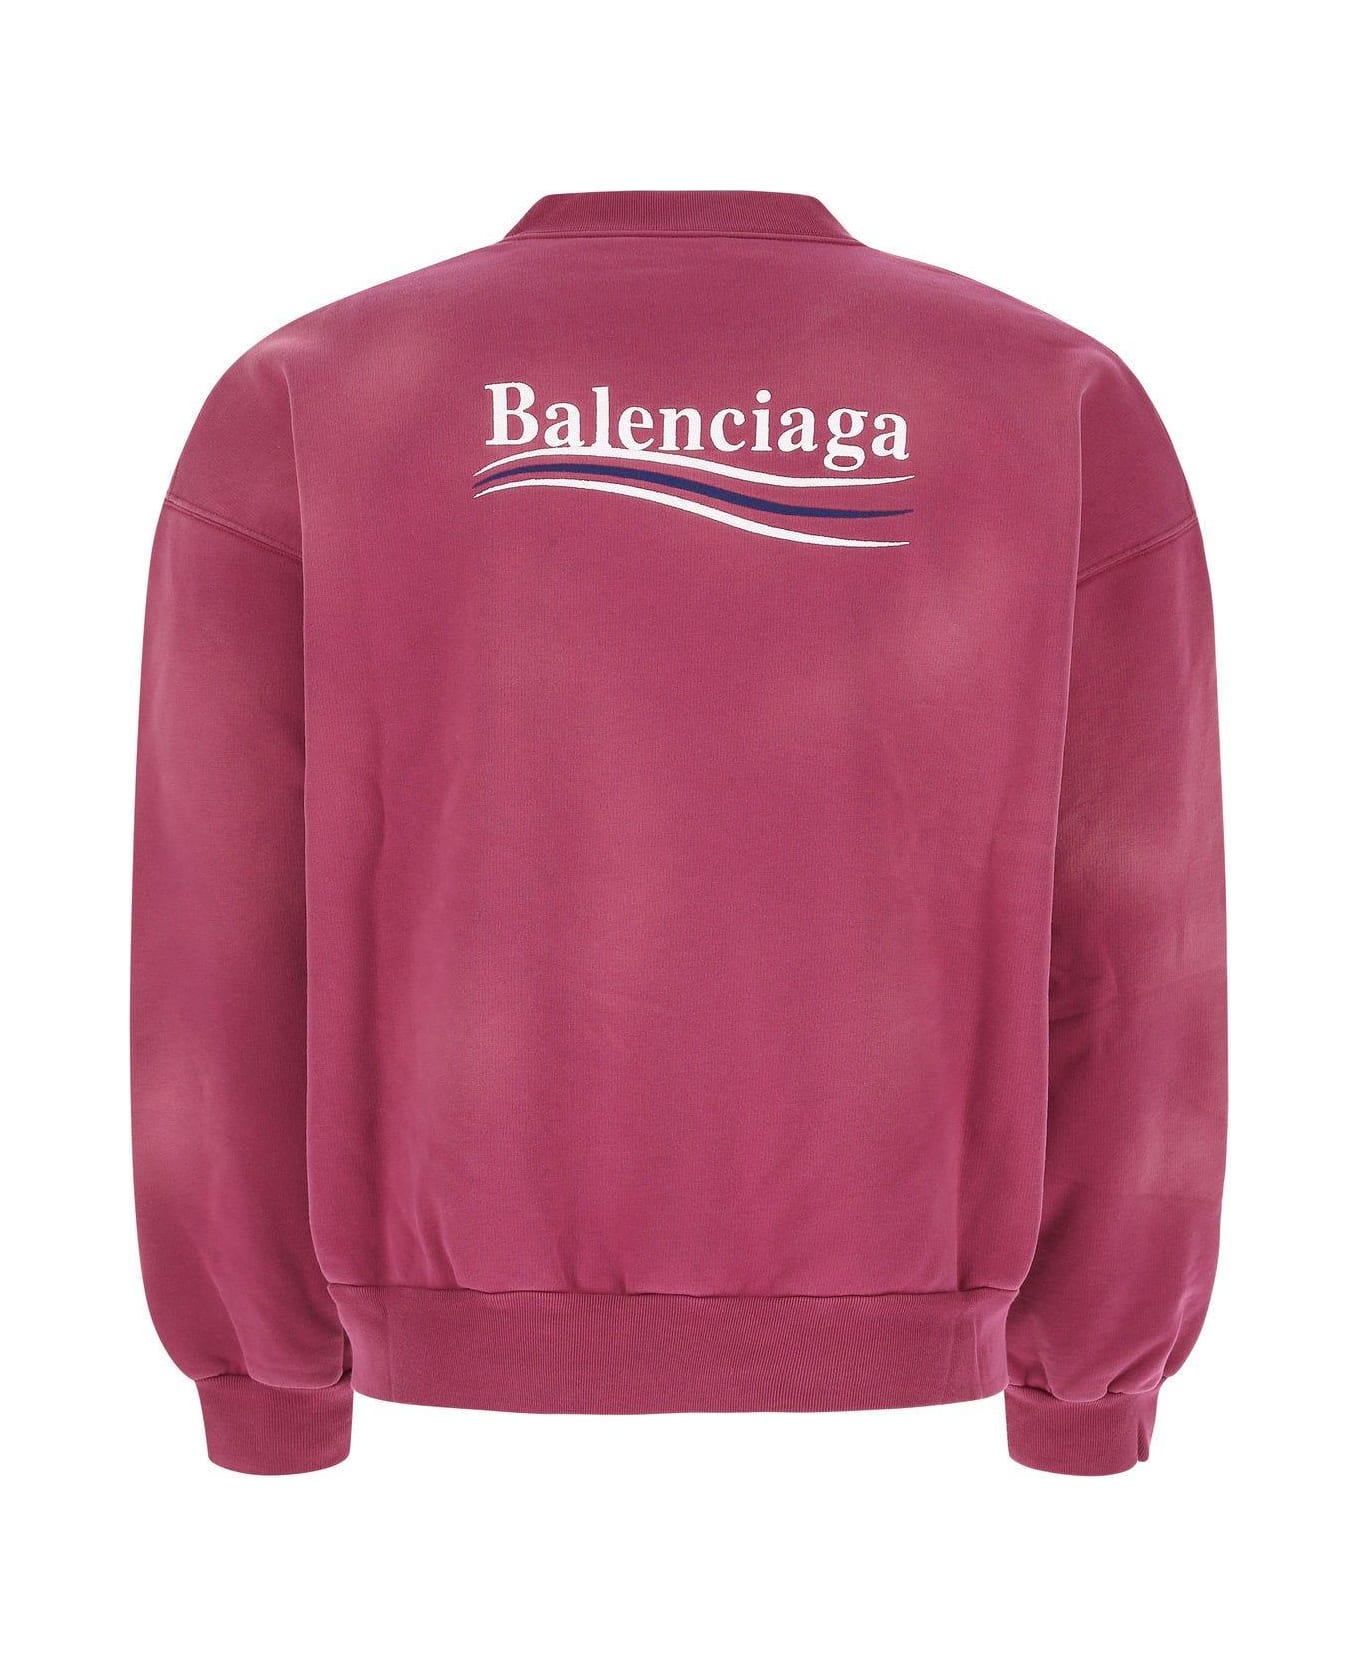 Balenciaga Tyrian Purple Cotton Oversize Sweatshirt - FUCHSIA